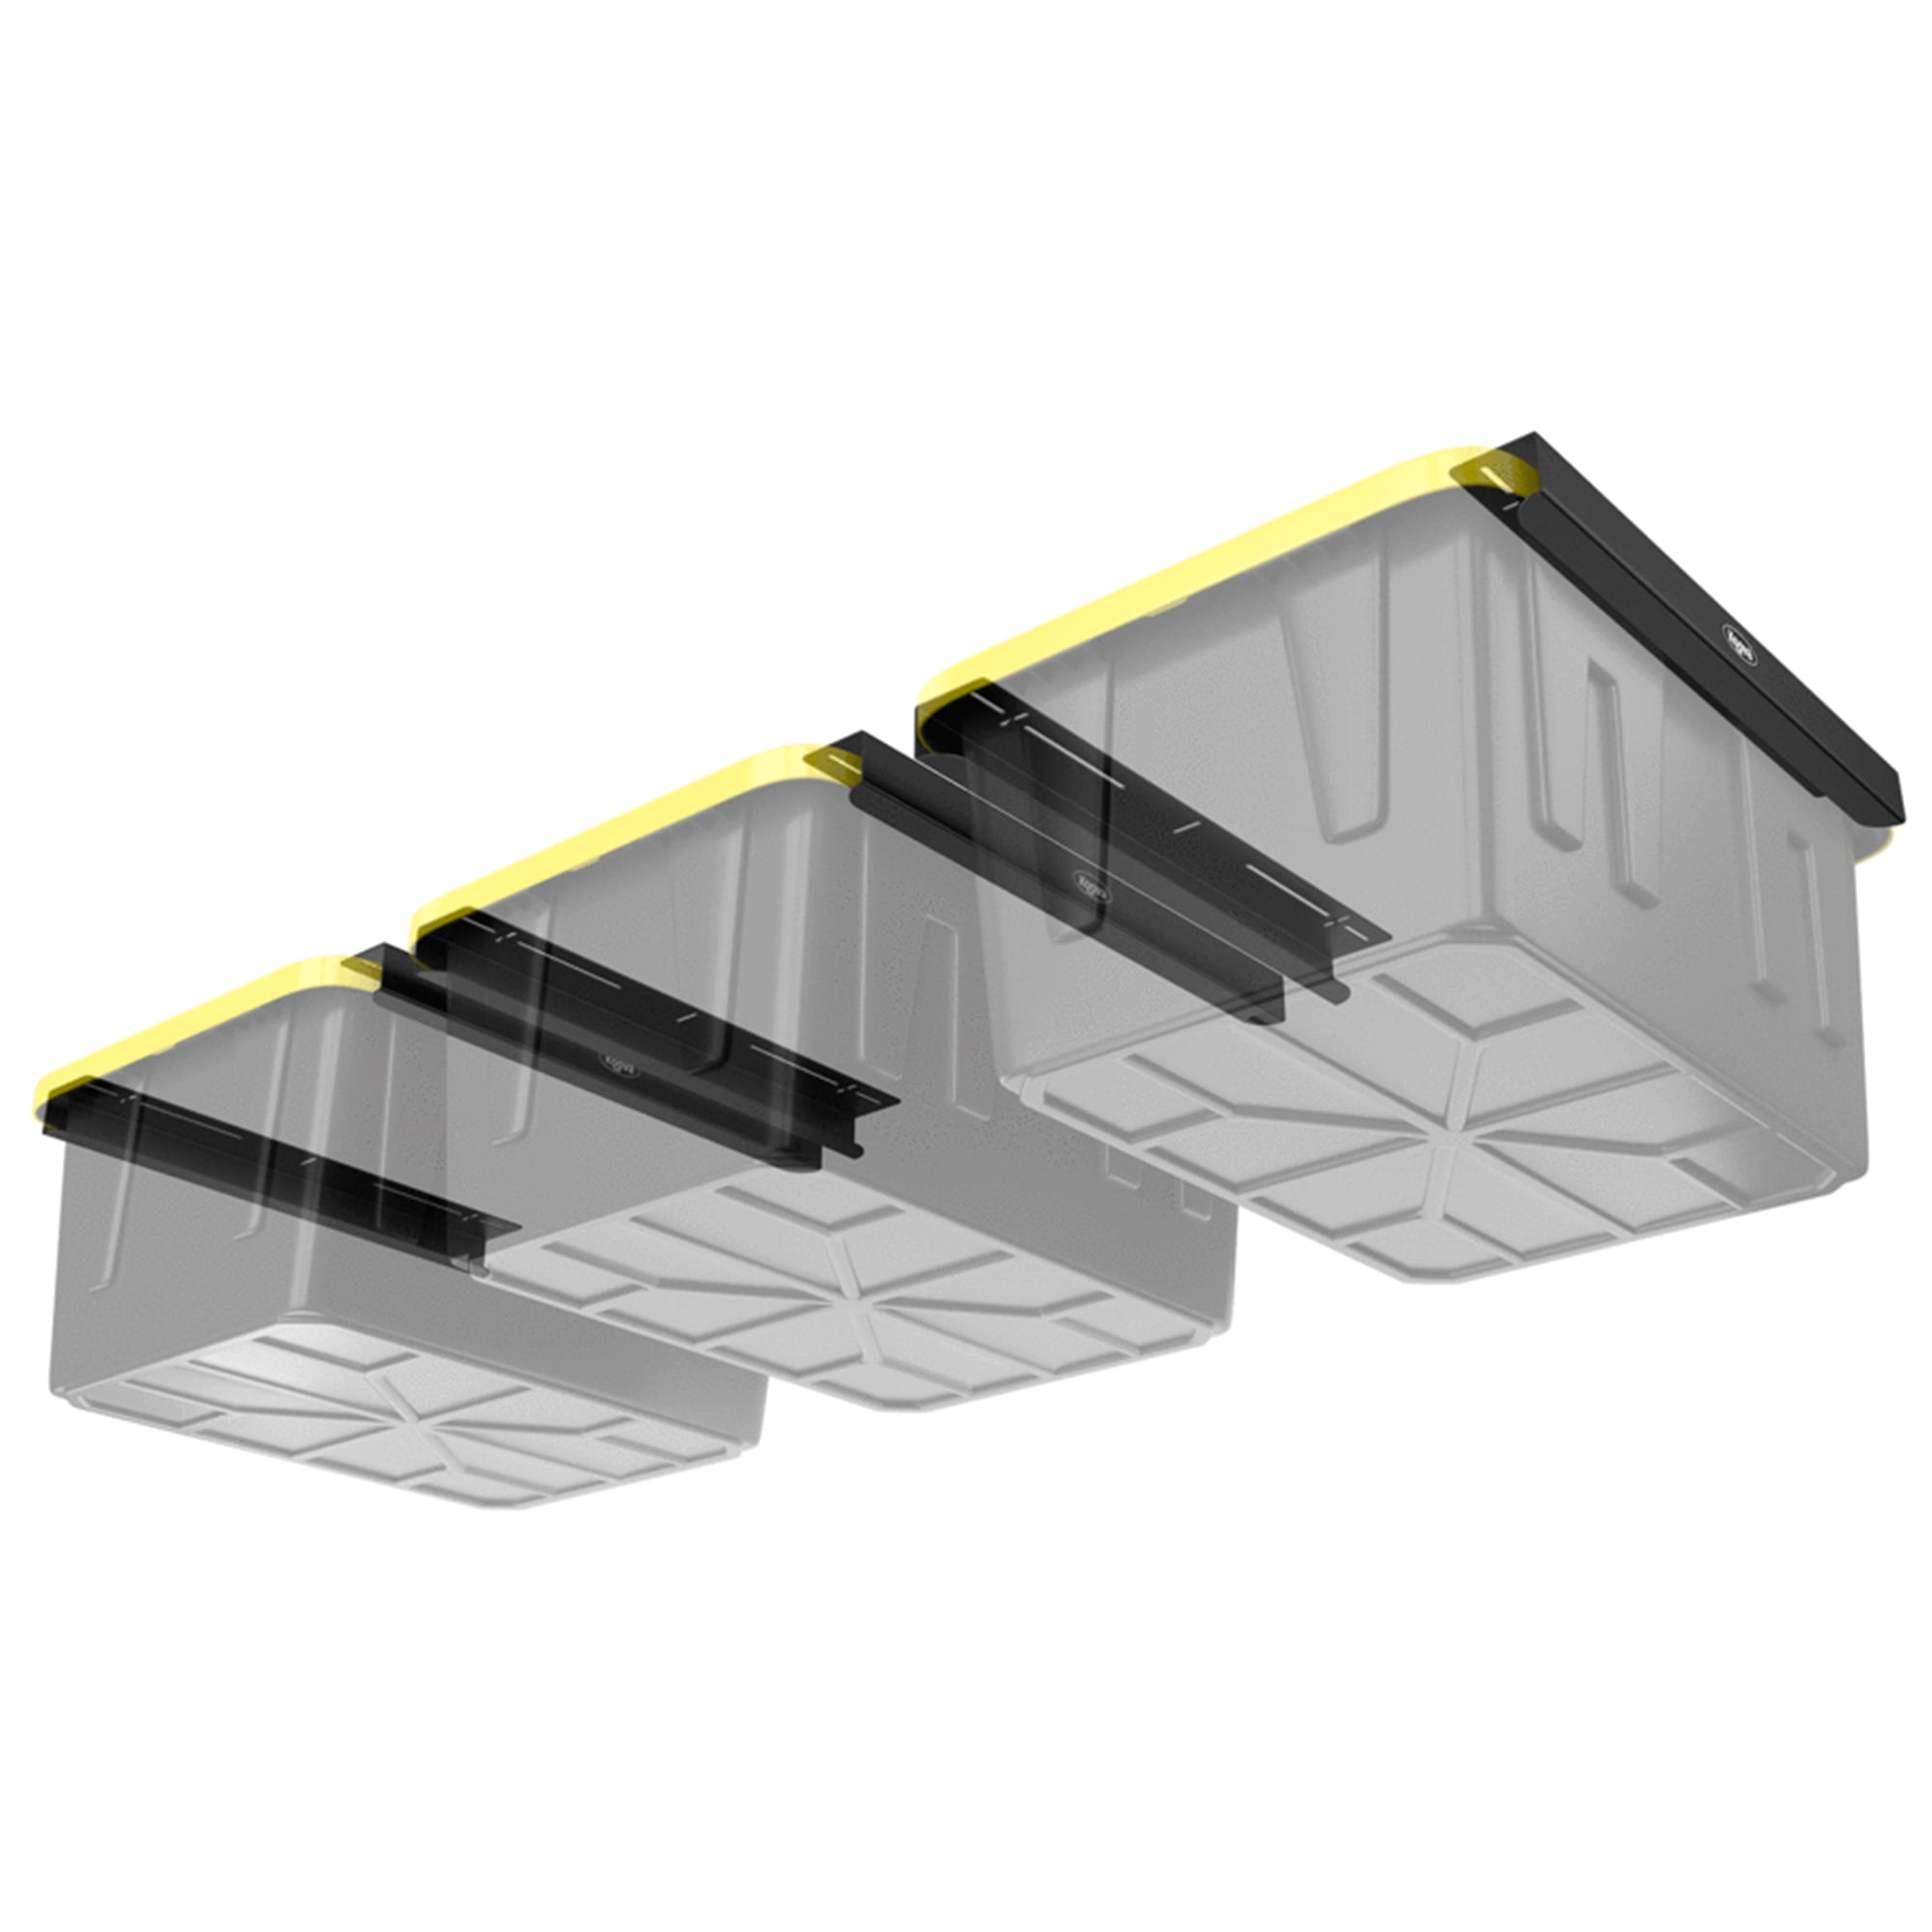 Koova Overhead Bin Rack for Three Bins | Overhead Garage Storage Rack to Mount on Ceiling with Adjustable Width